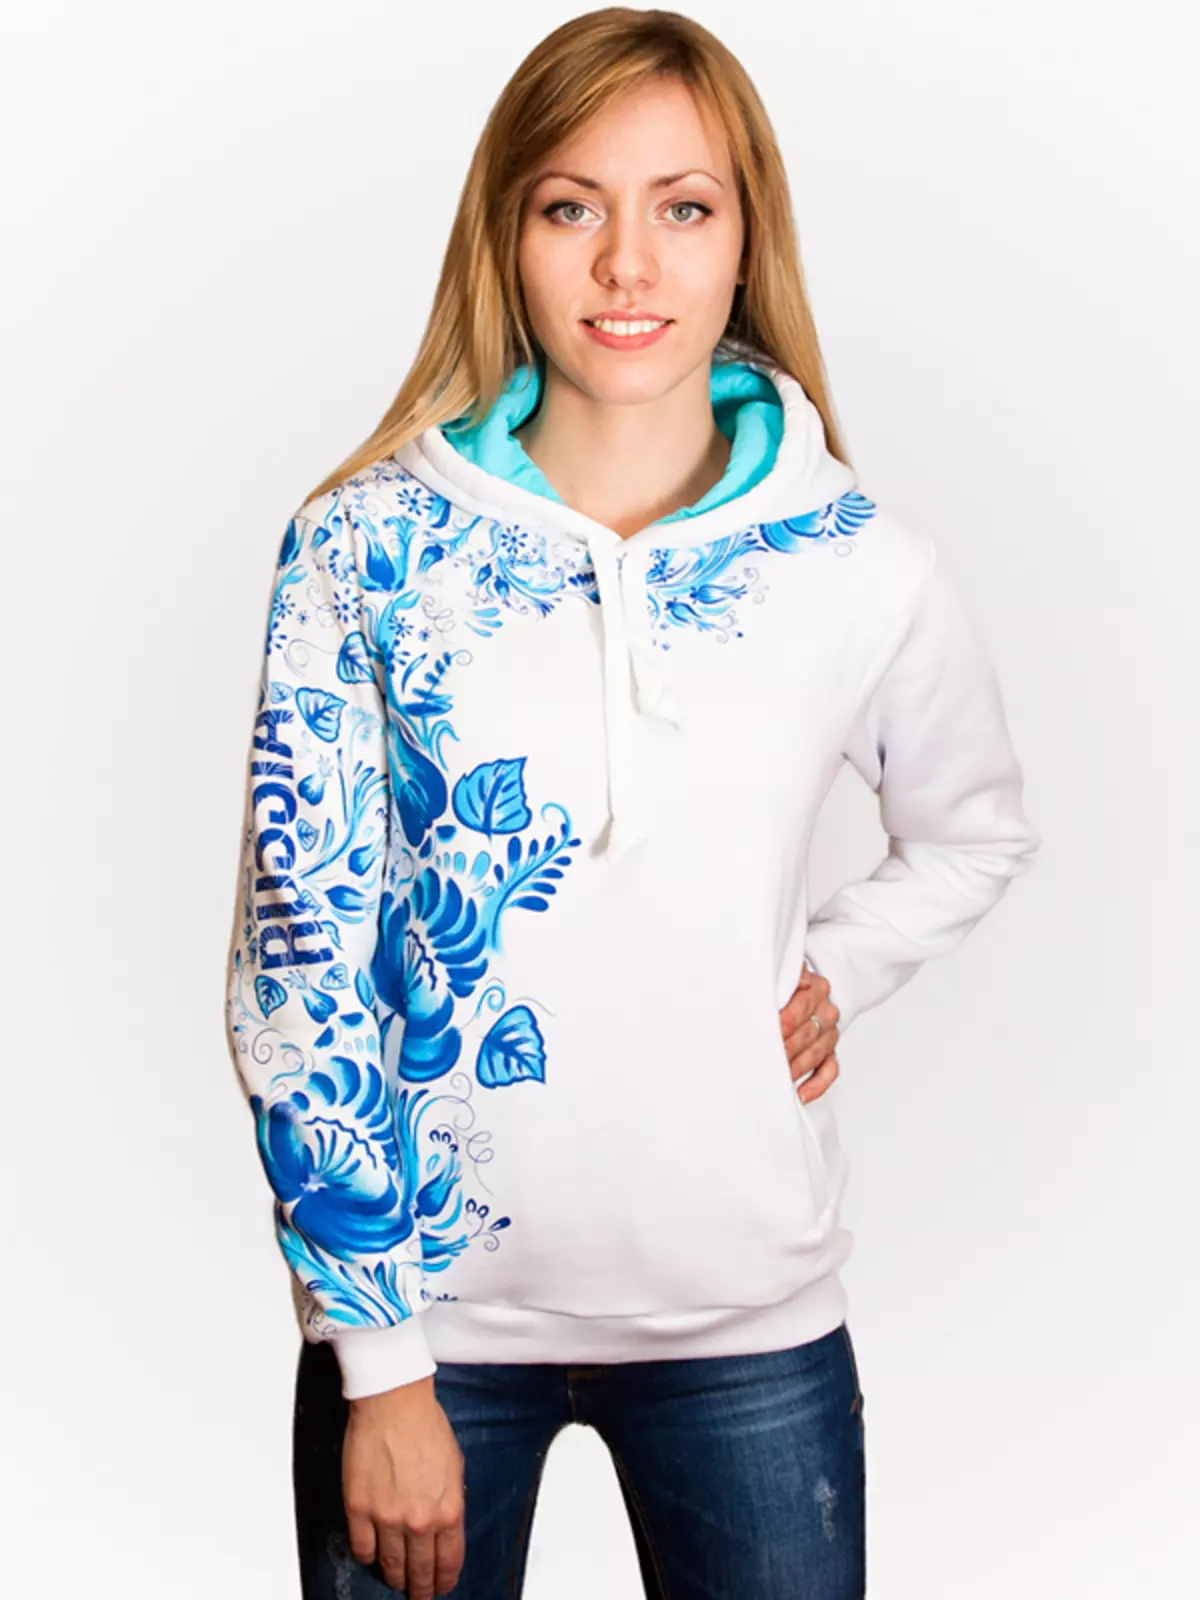 Hoody (160 فوٹو): خواتین کے سویٹر hoodies، adidas، نائکی، نیوی، Hoody کپڑے، سنوبورڈ، reebok سے علامت (لوگو) کے ساتھ، علامت (لوگو)، Hoodie کے ساتھ، 1310_100